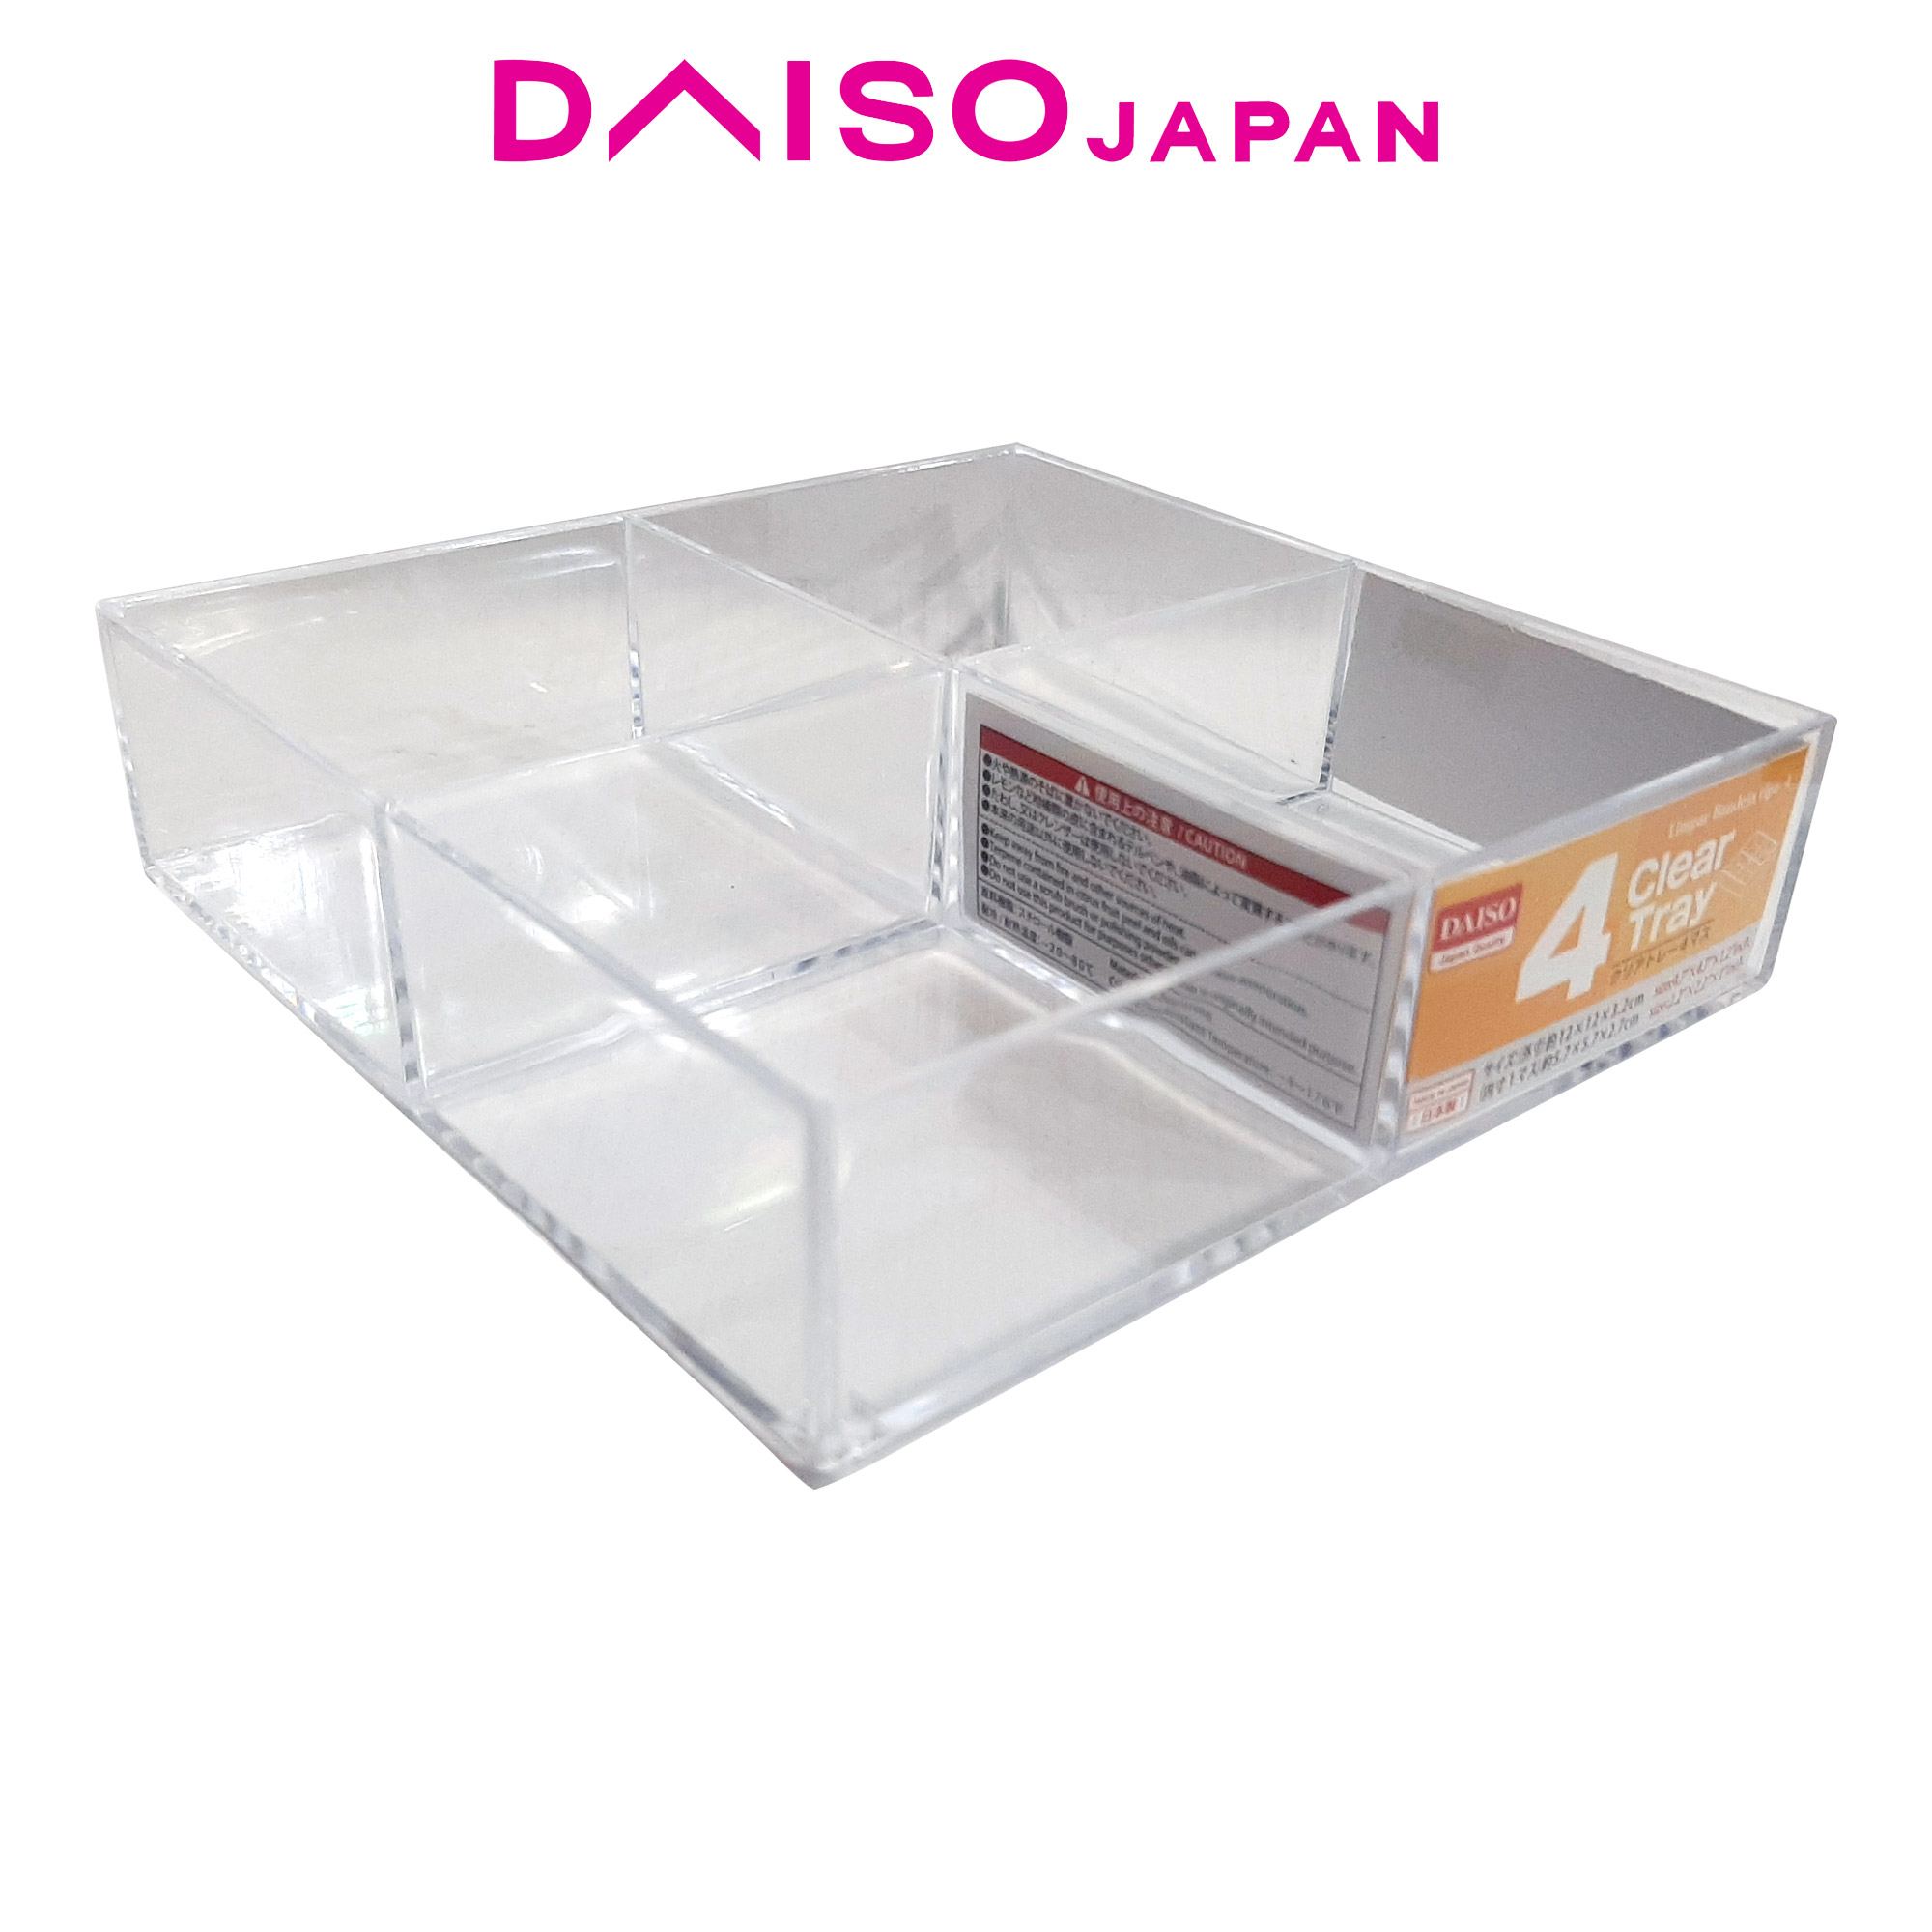 DAISO JAPAN Half size storage box Vehicles japan import 